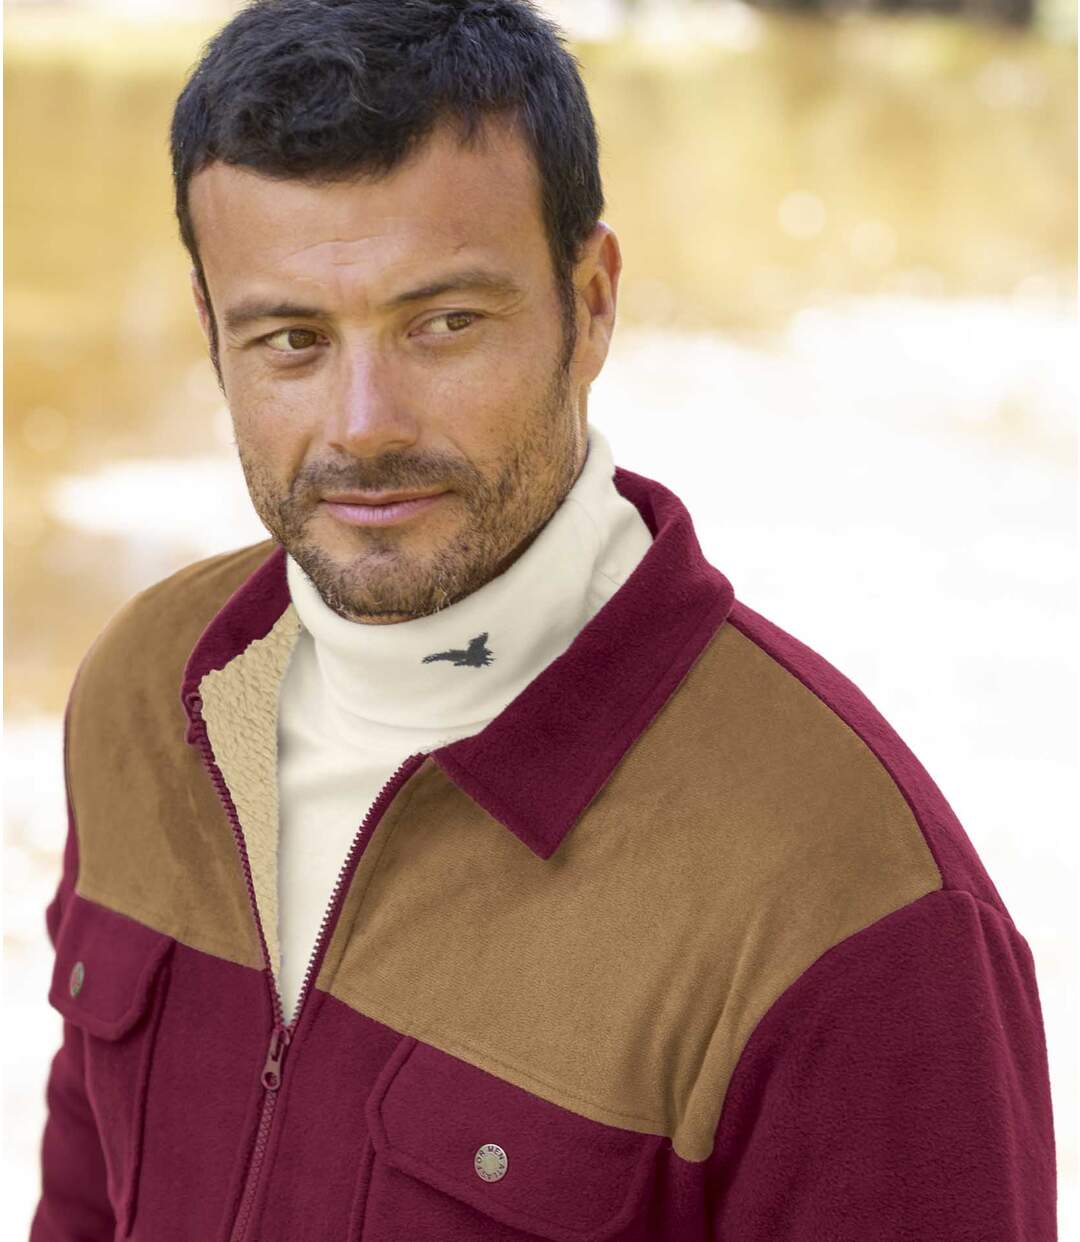 Men's Burgundy Sherpa-Lined Fleece Jacket  Atlas For Men